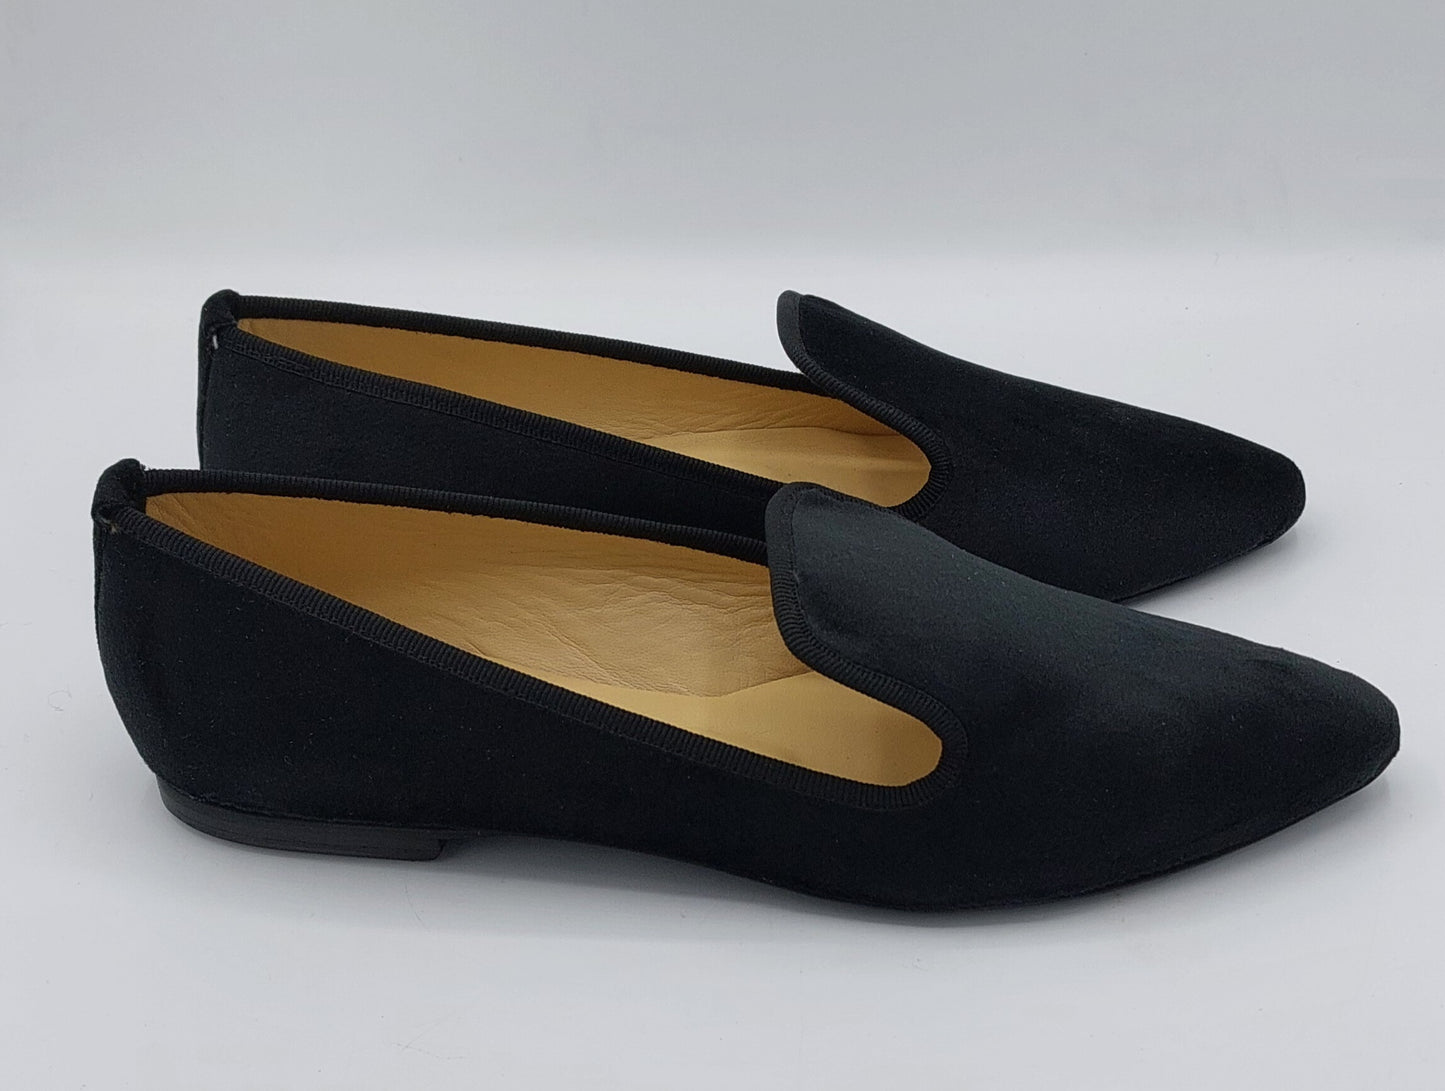 Pantofolina in velluto nera